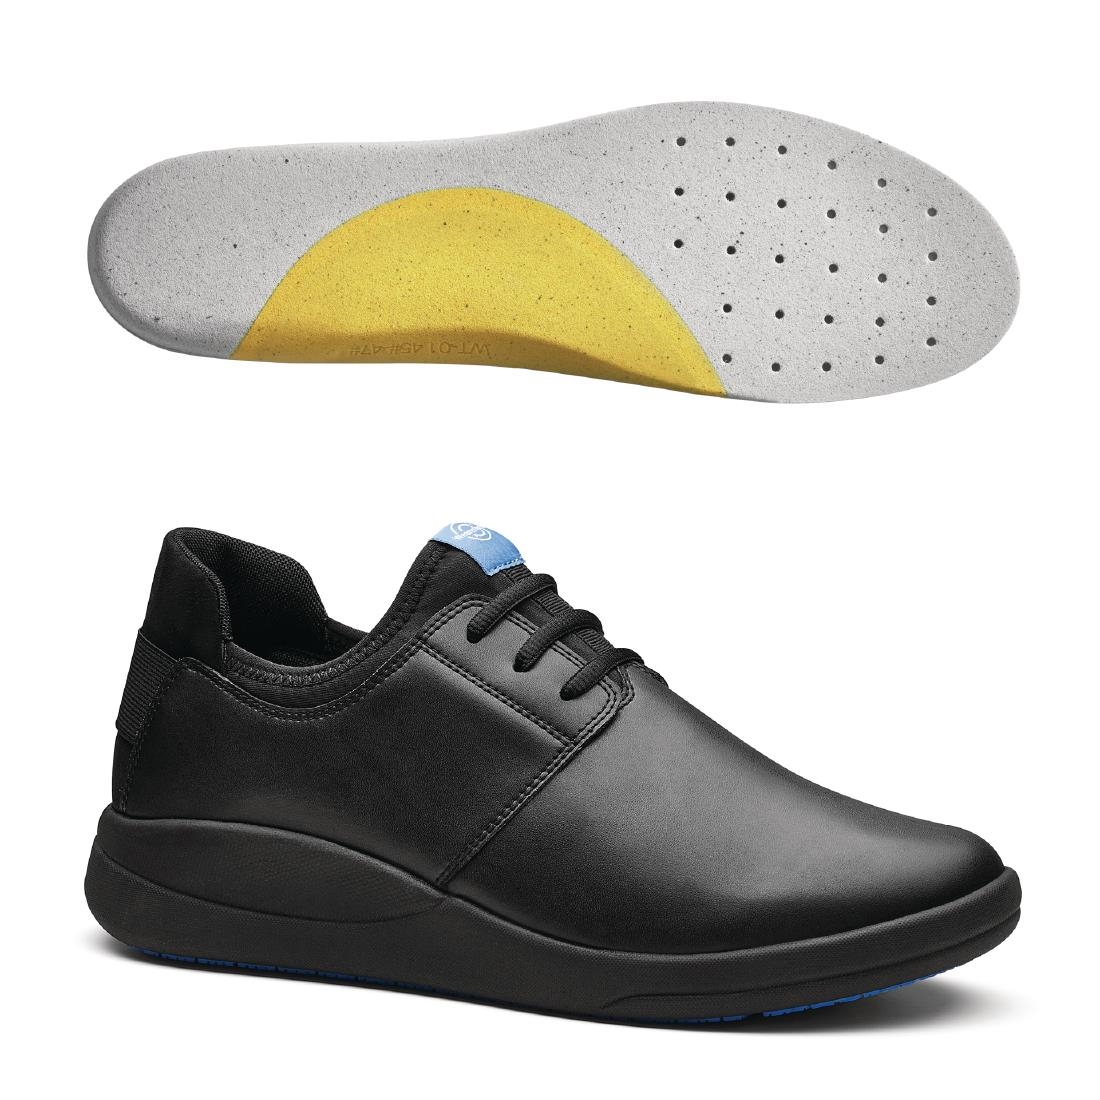 WearerTech Relieve Shoe Black with Soft Insoles Size 47